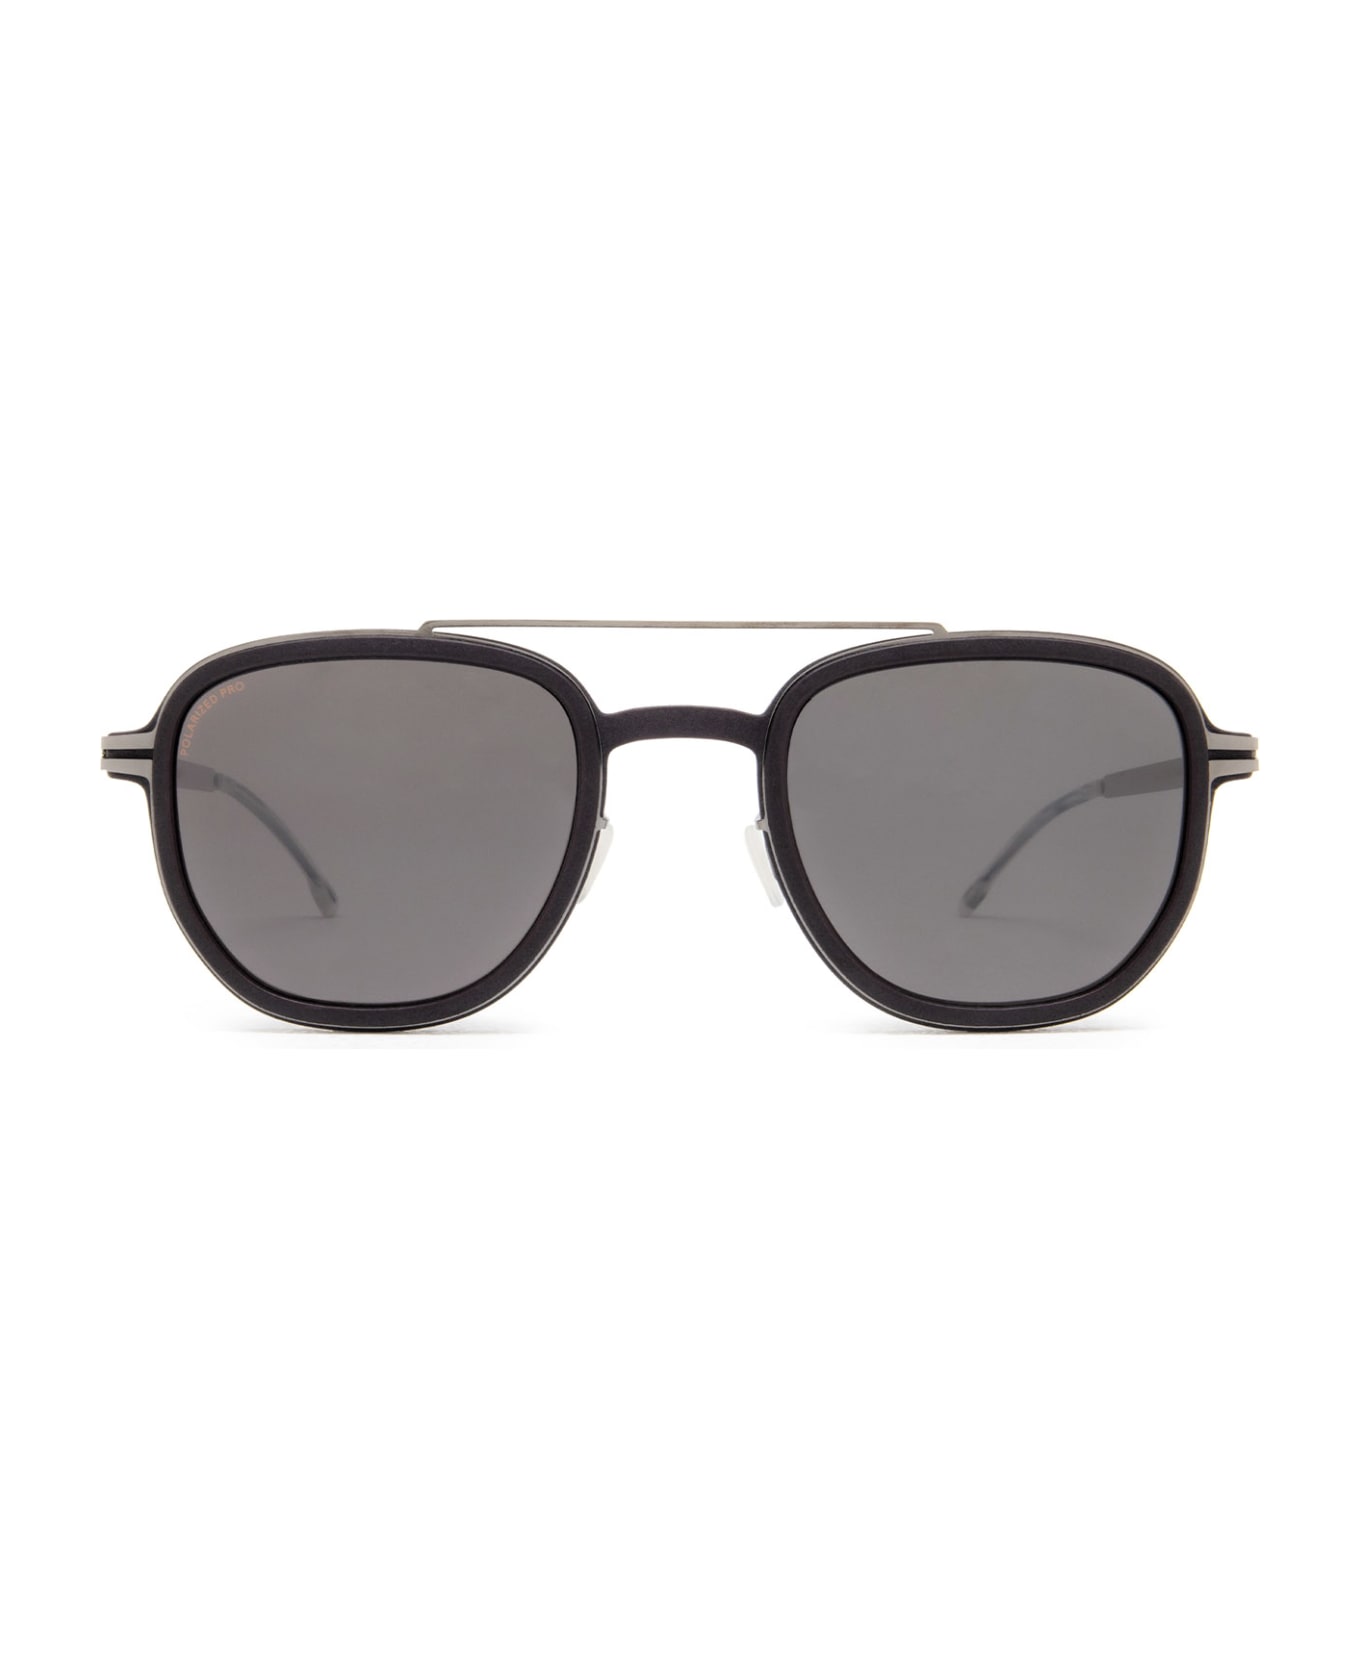 Mykita Alder Sun Mh60 Slate Grey/shiny Graphite Sunglasses - MH60 Slate Grey/Shiny Graphite